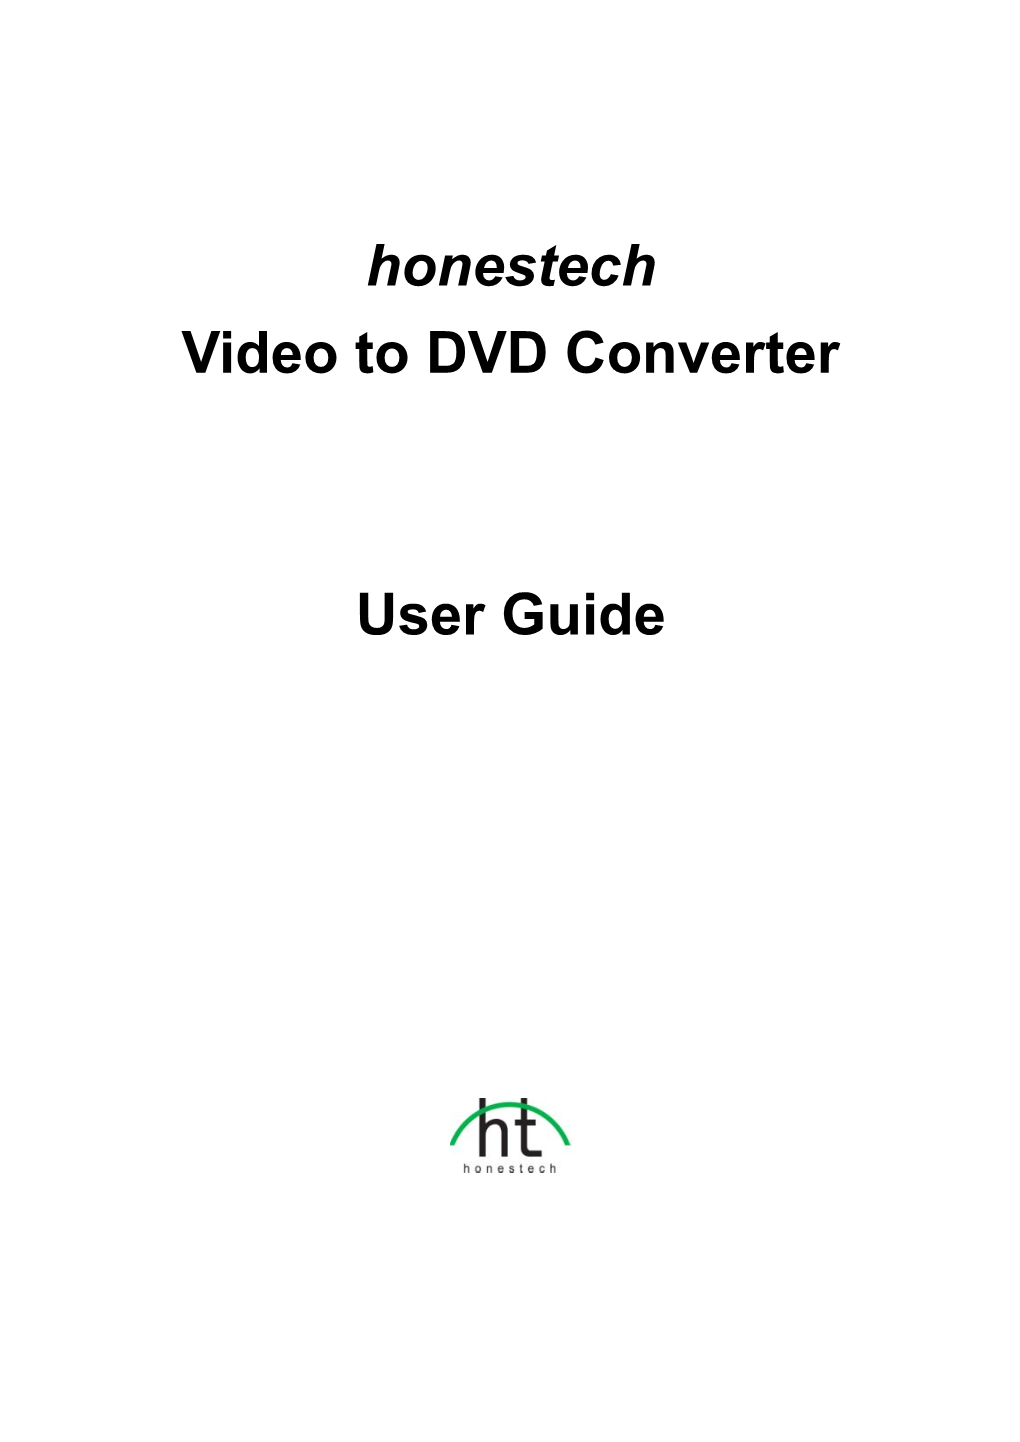 Honestech Video to DVD Converter User Guide